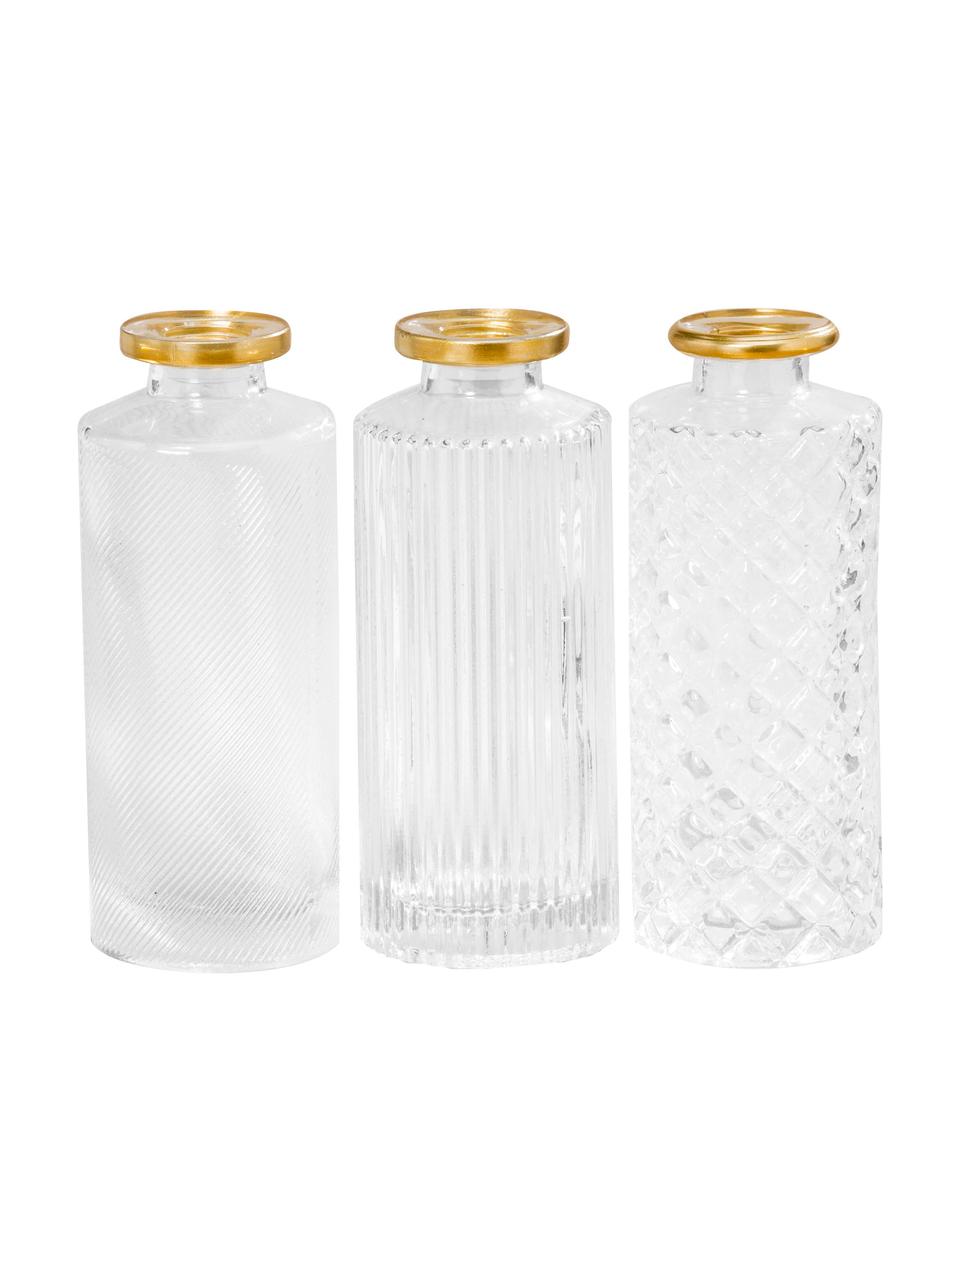 Set de jarrones pequeños de vidrio Adore, 3 uds., Vidrio pintado, Transparente, dorado, Ø 5 x Al 13 cm